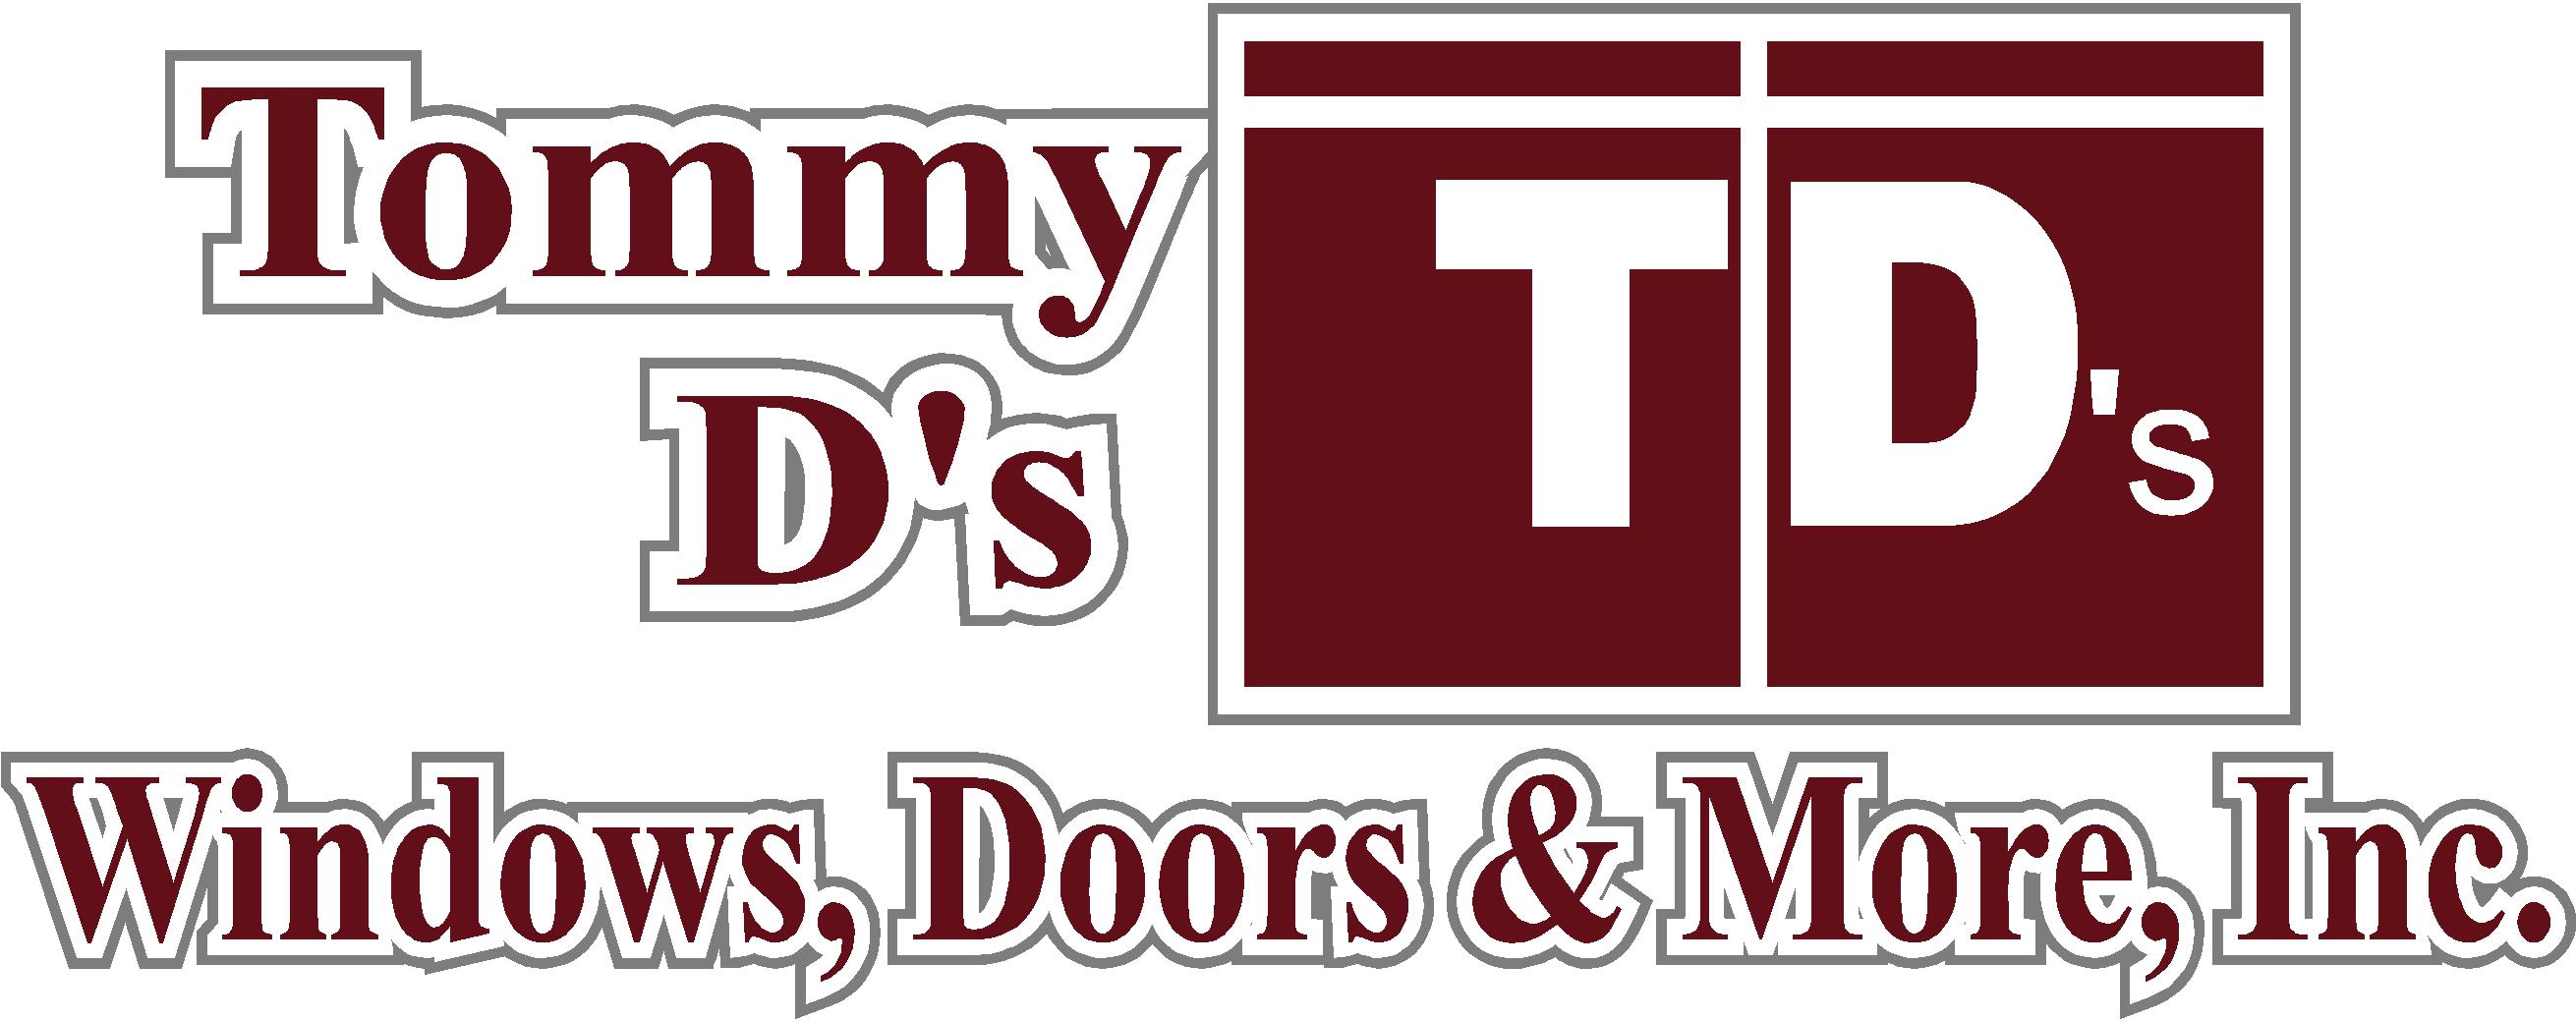 Tommy D's Windows, Doors & More Inc.